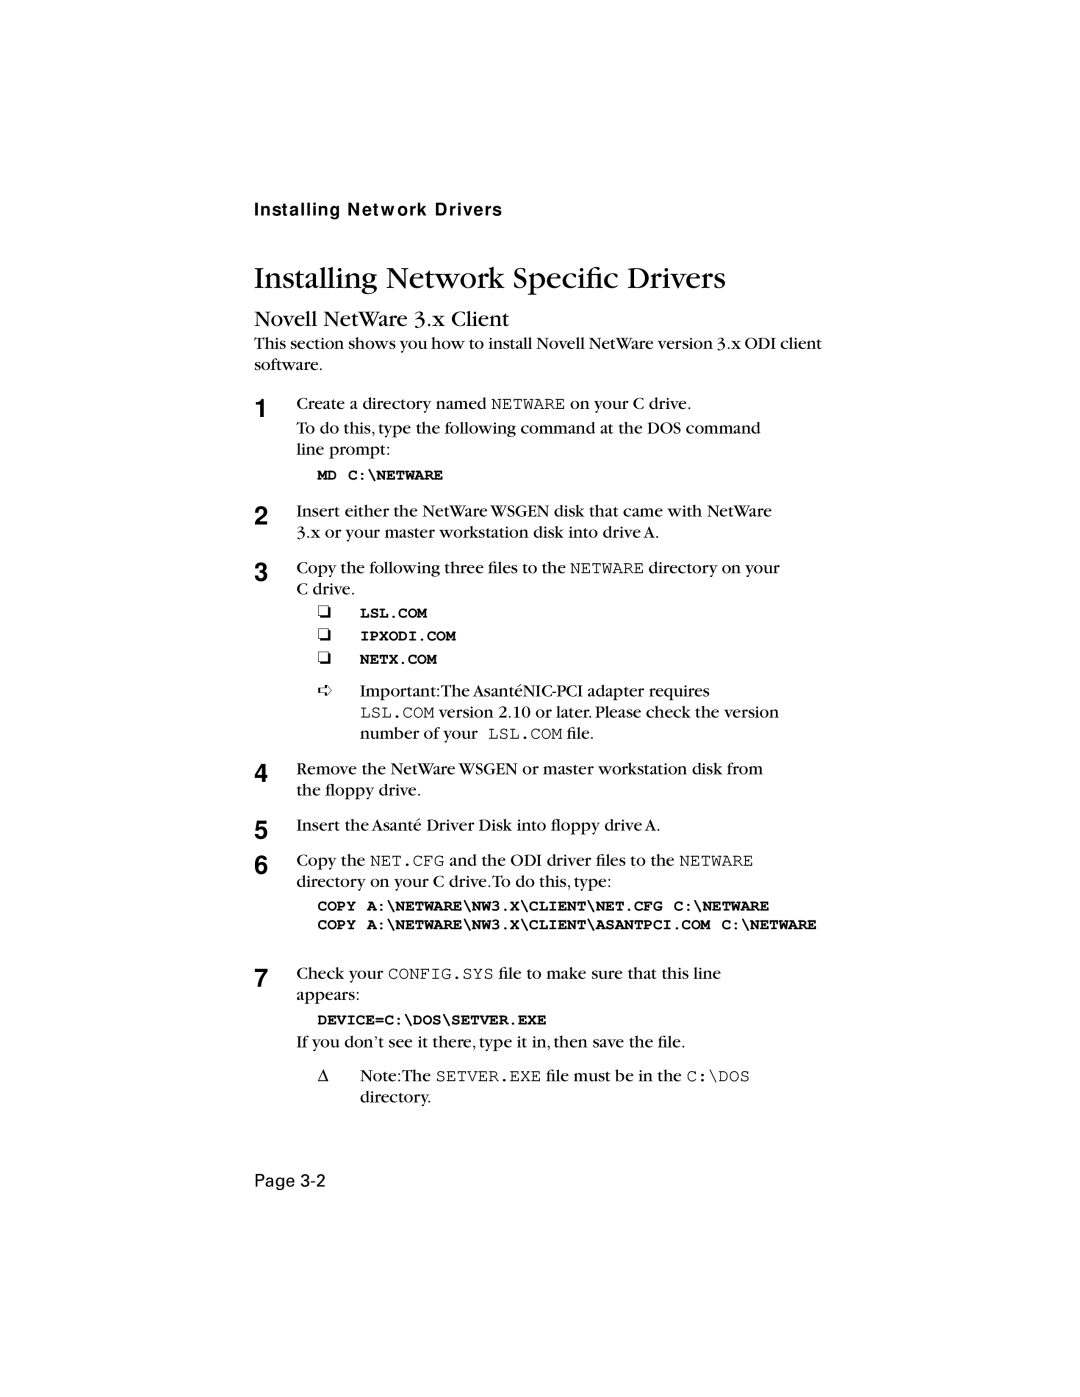 Asante Technologies 10/100 manual Installing Network Speciﬁc Drivers, Novell NetWare 3.x Client 